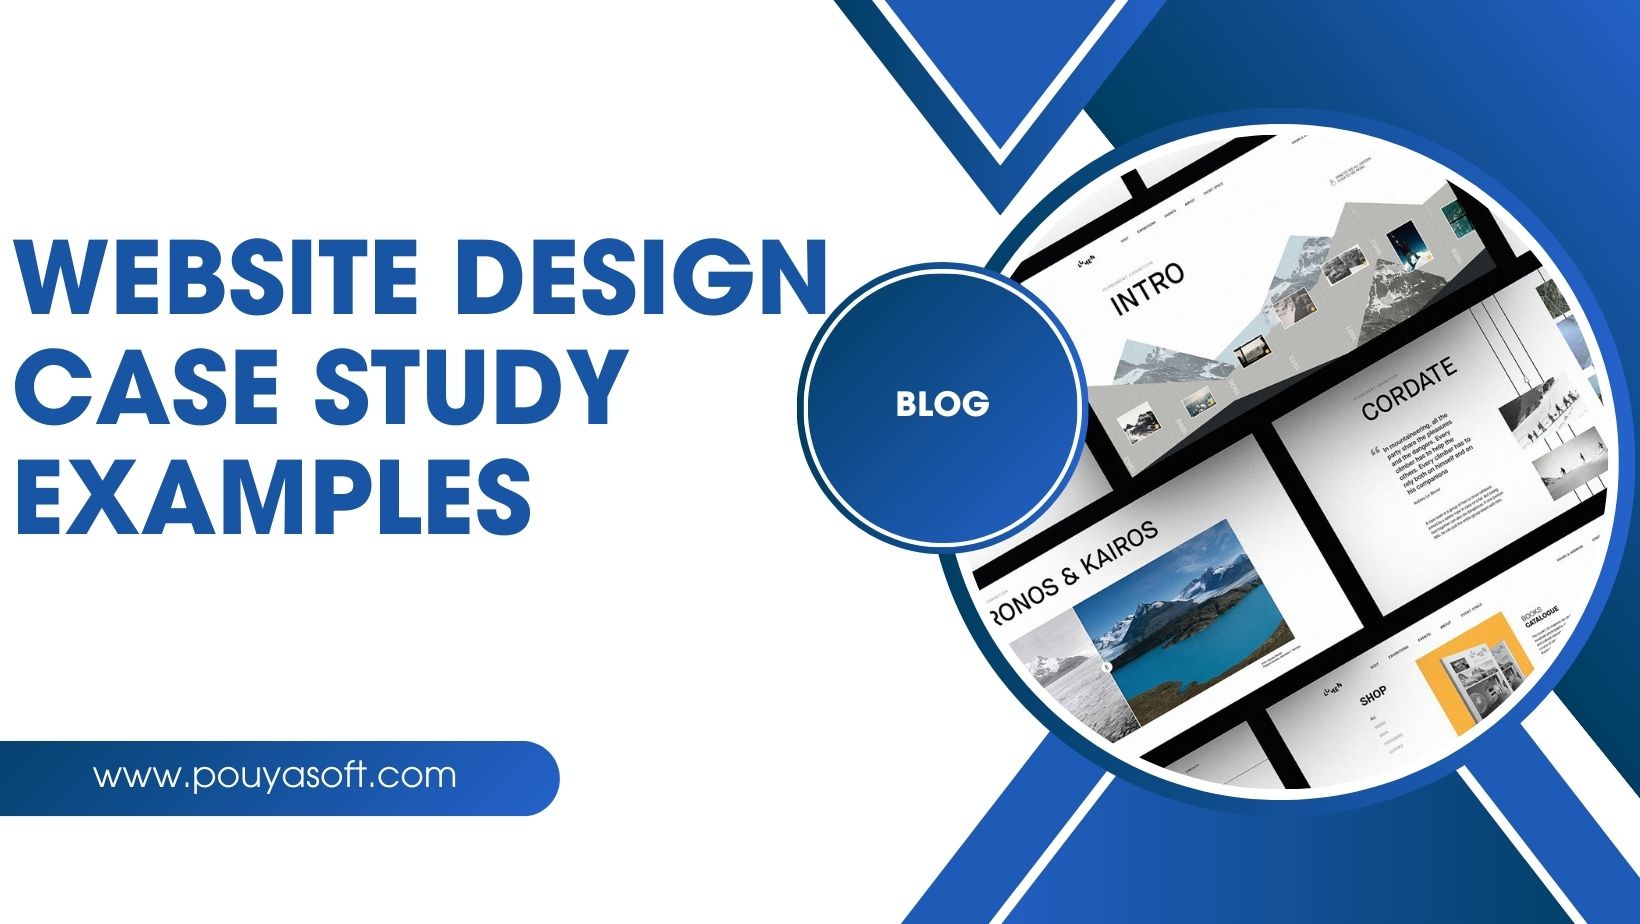 website design case study examples - pouyasoft